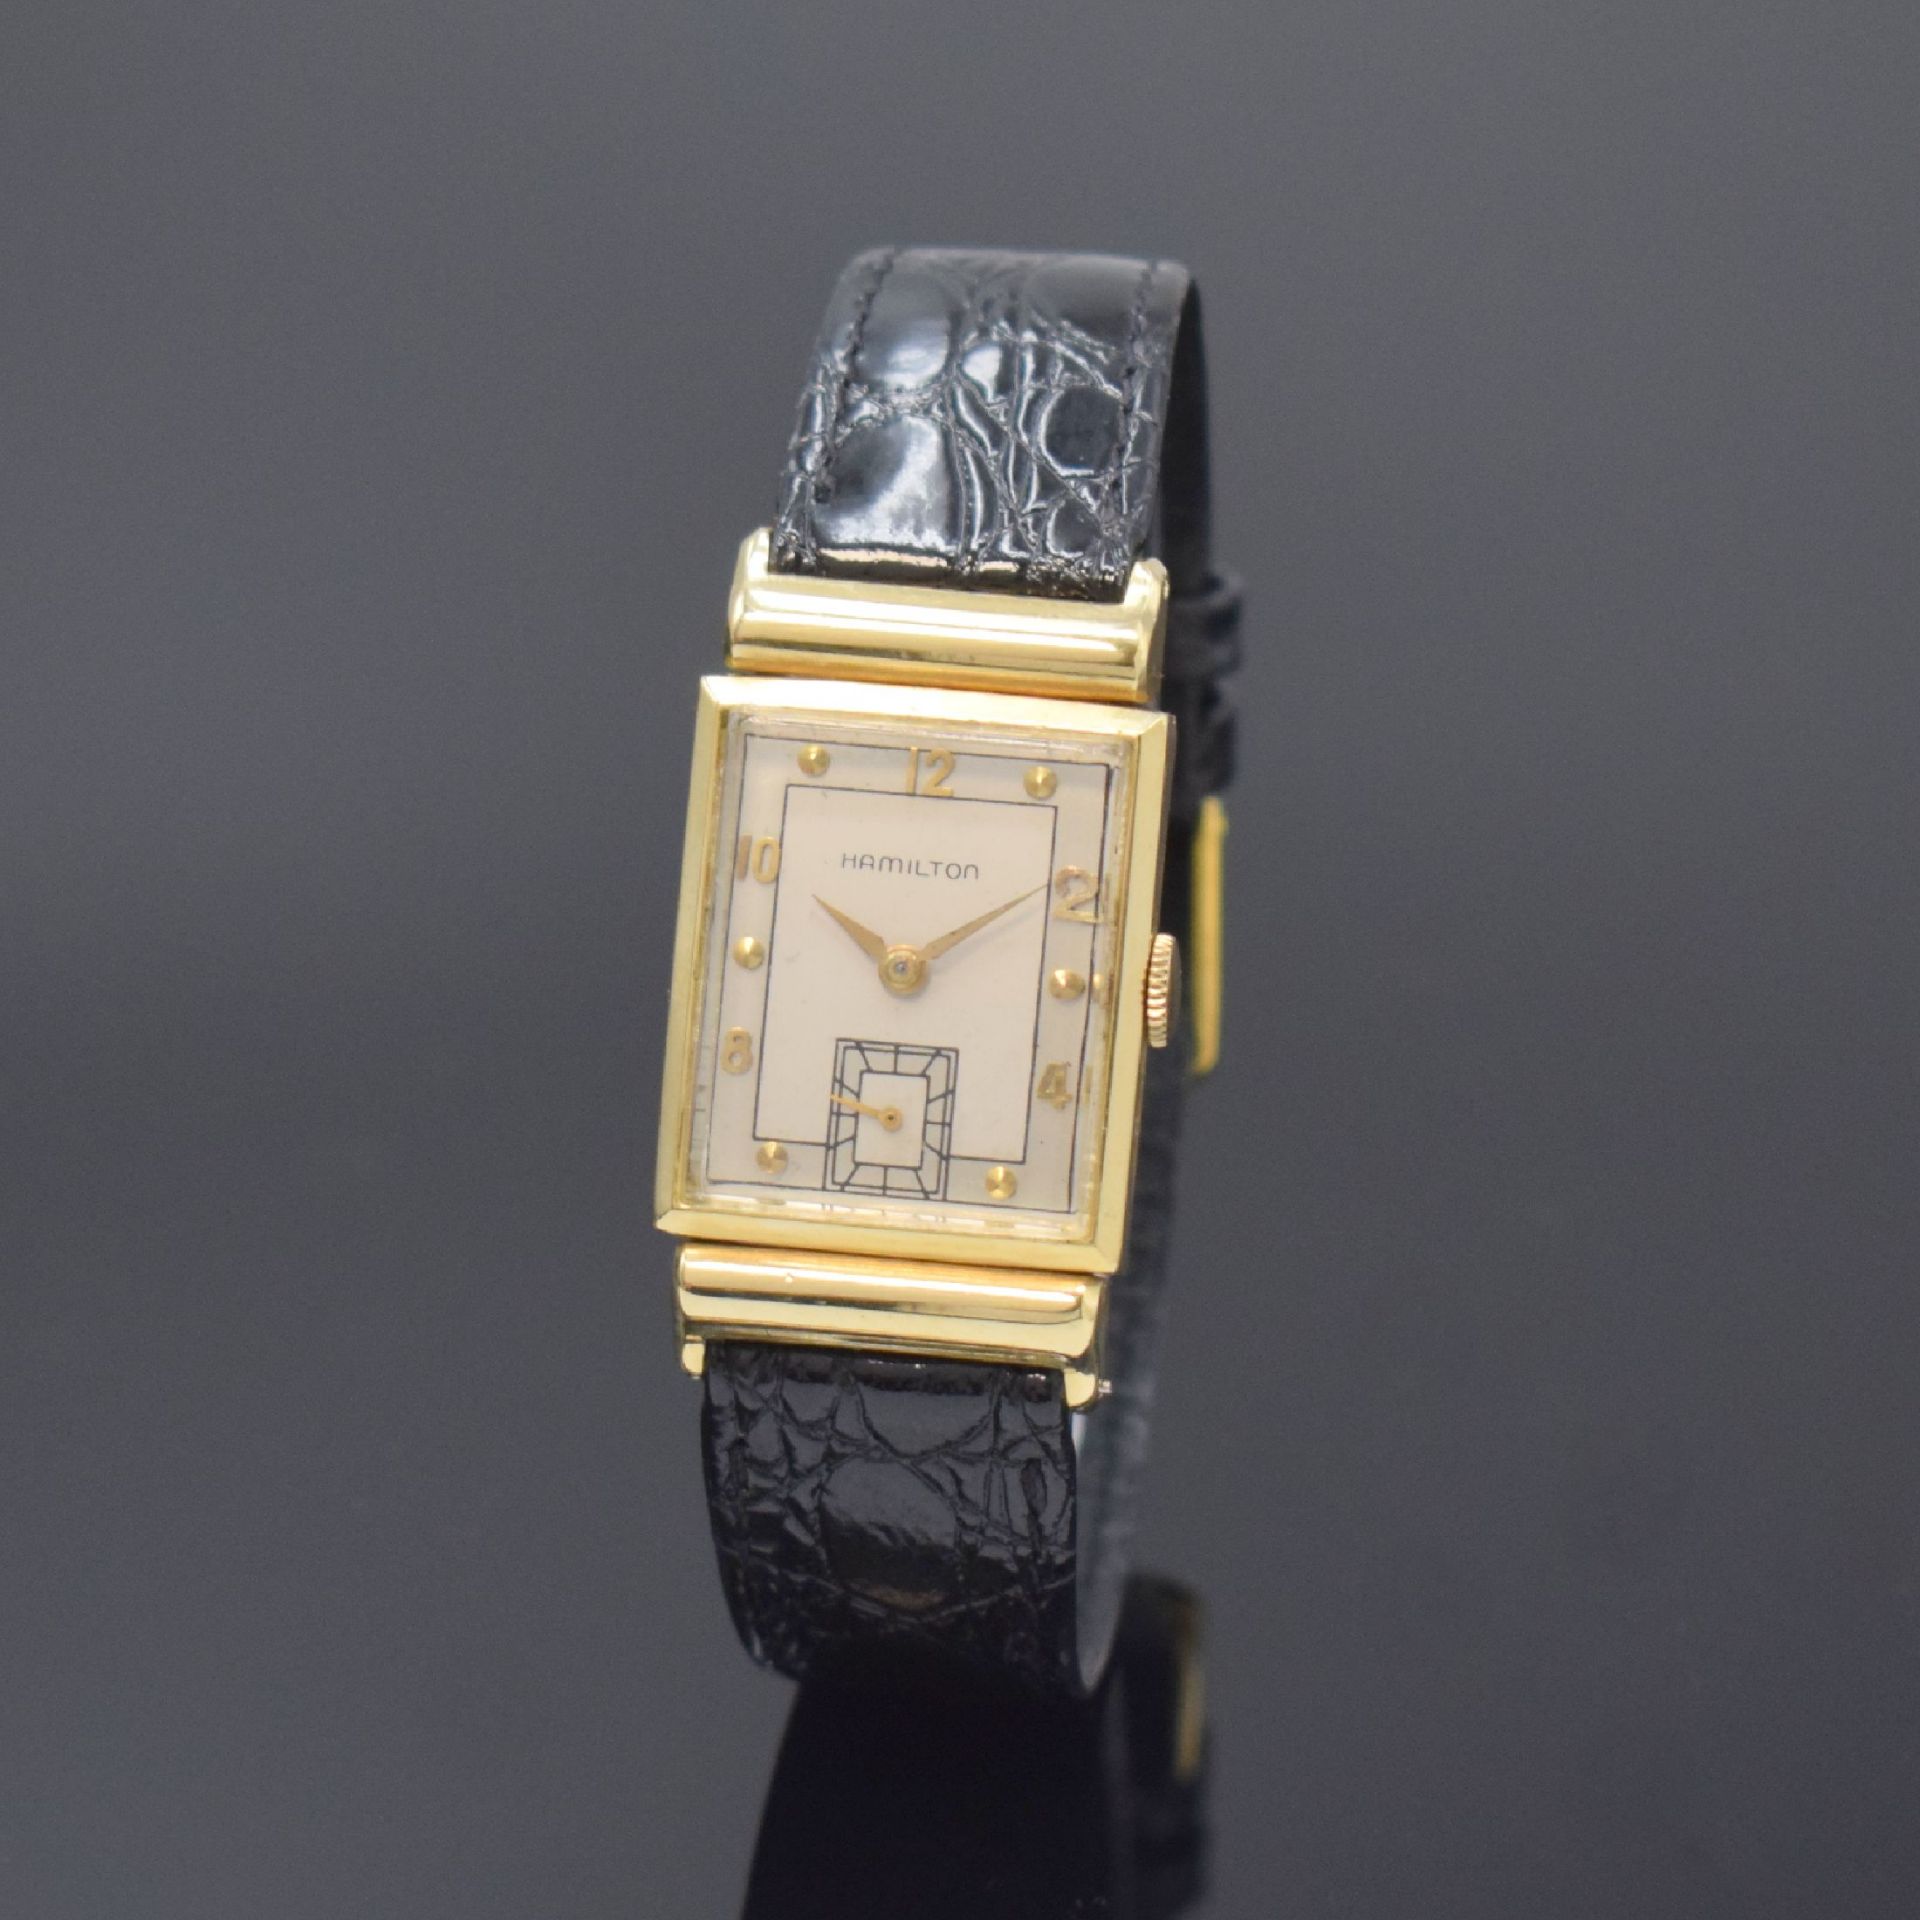 HAMILTON rechteckige Armbanduhr in 14k Gelbgold, USA um